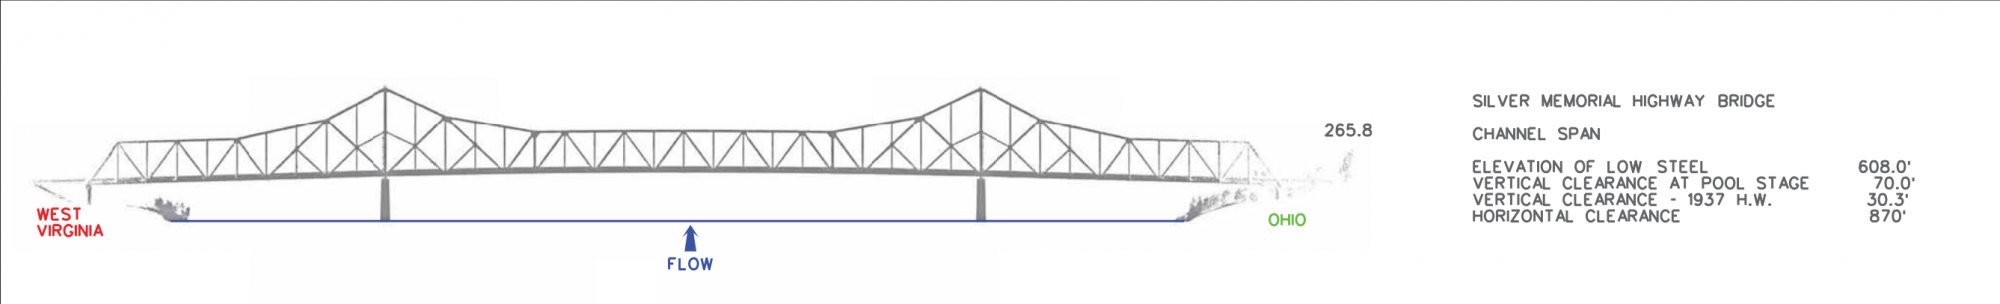 Silver Memorial Hwy Bridge Clearances | Bridge Calculator LLC